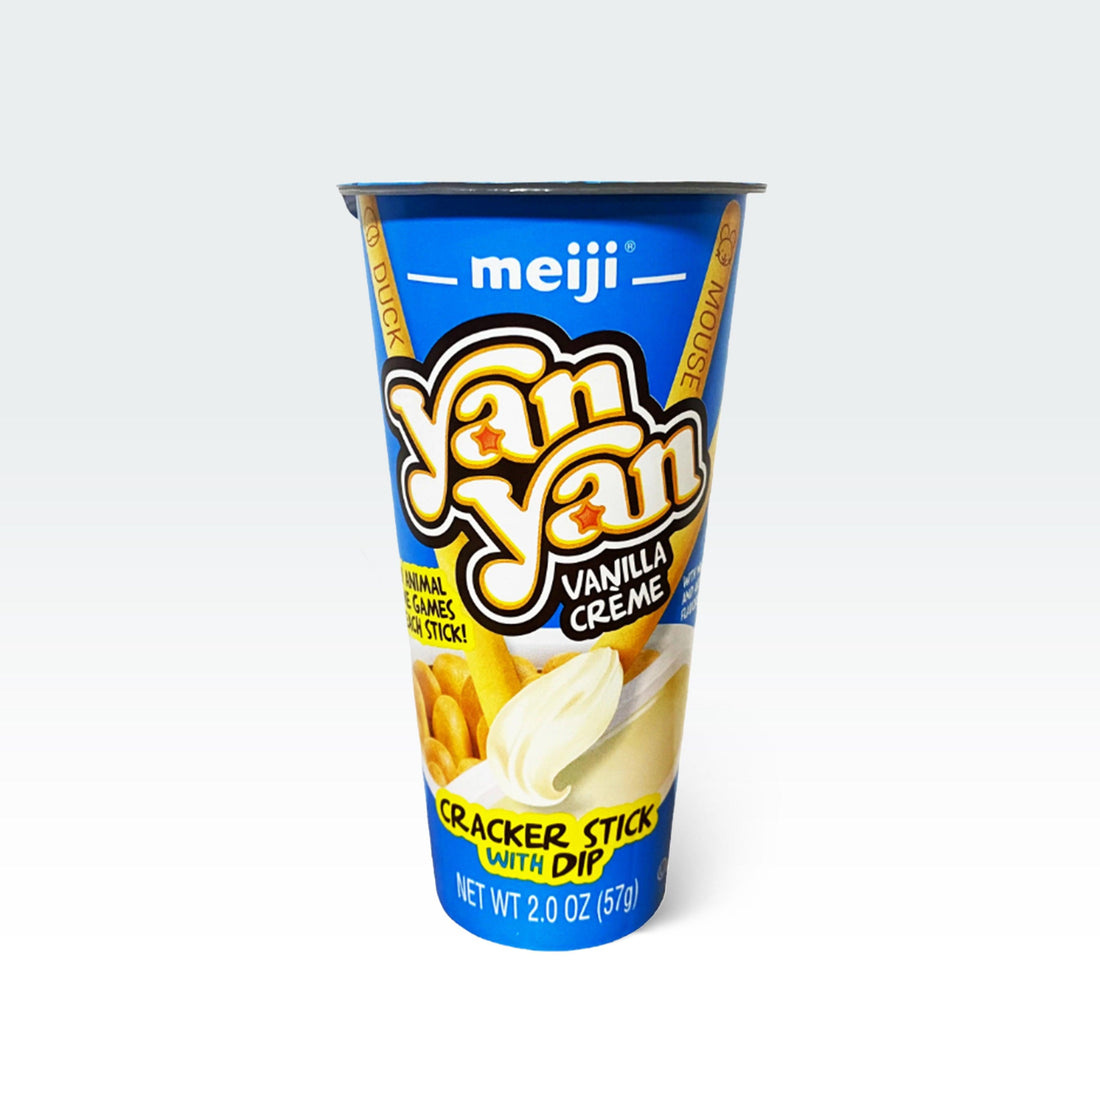 Meiji Yan Yan Cracker Stick With Dip - Vanilla Cream 2oz - Anytime Basket